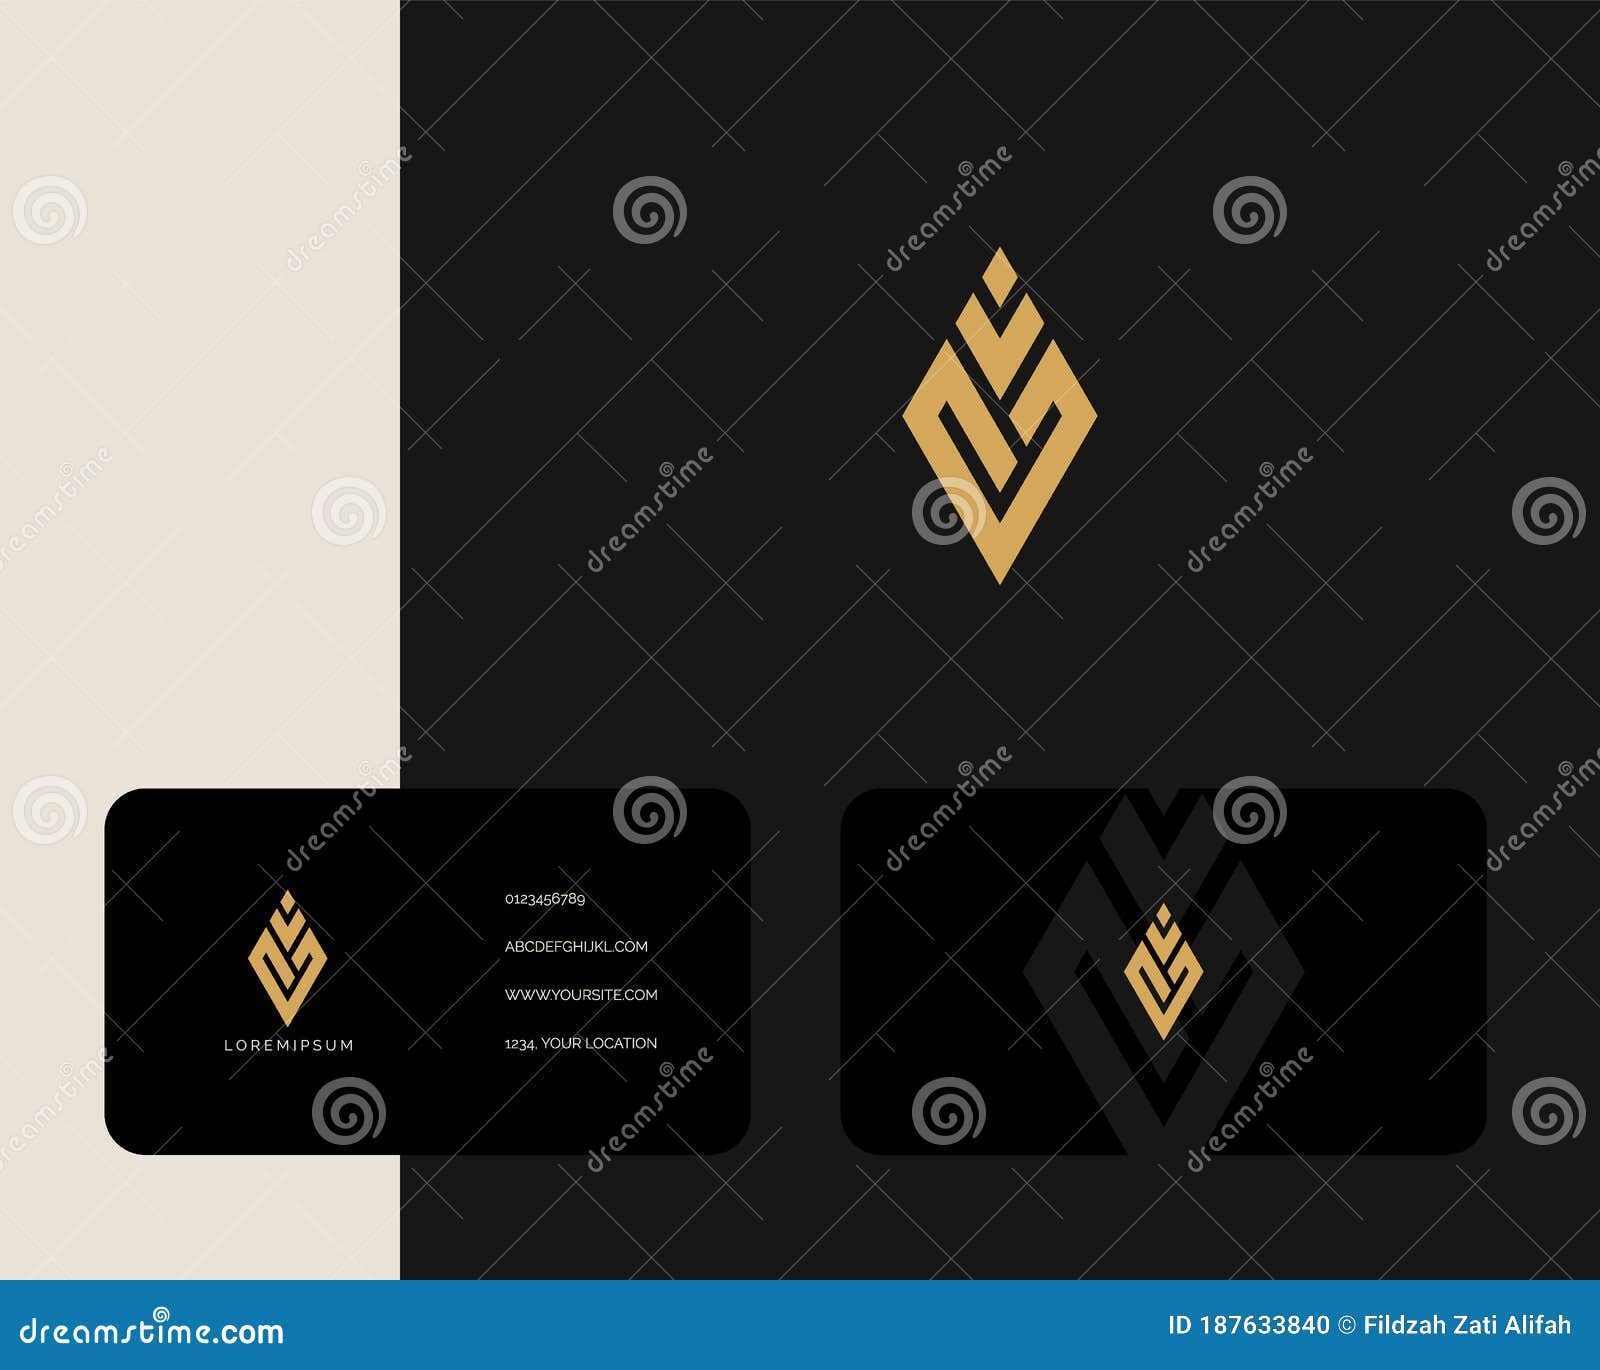 Premium Vector  Collection letter v monogram logo design